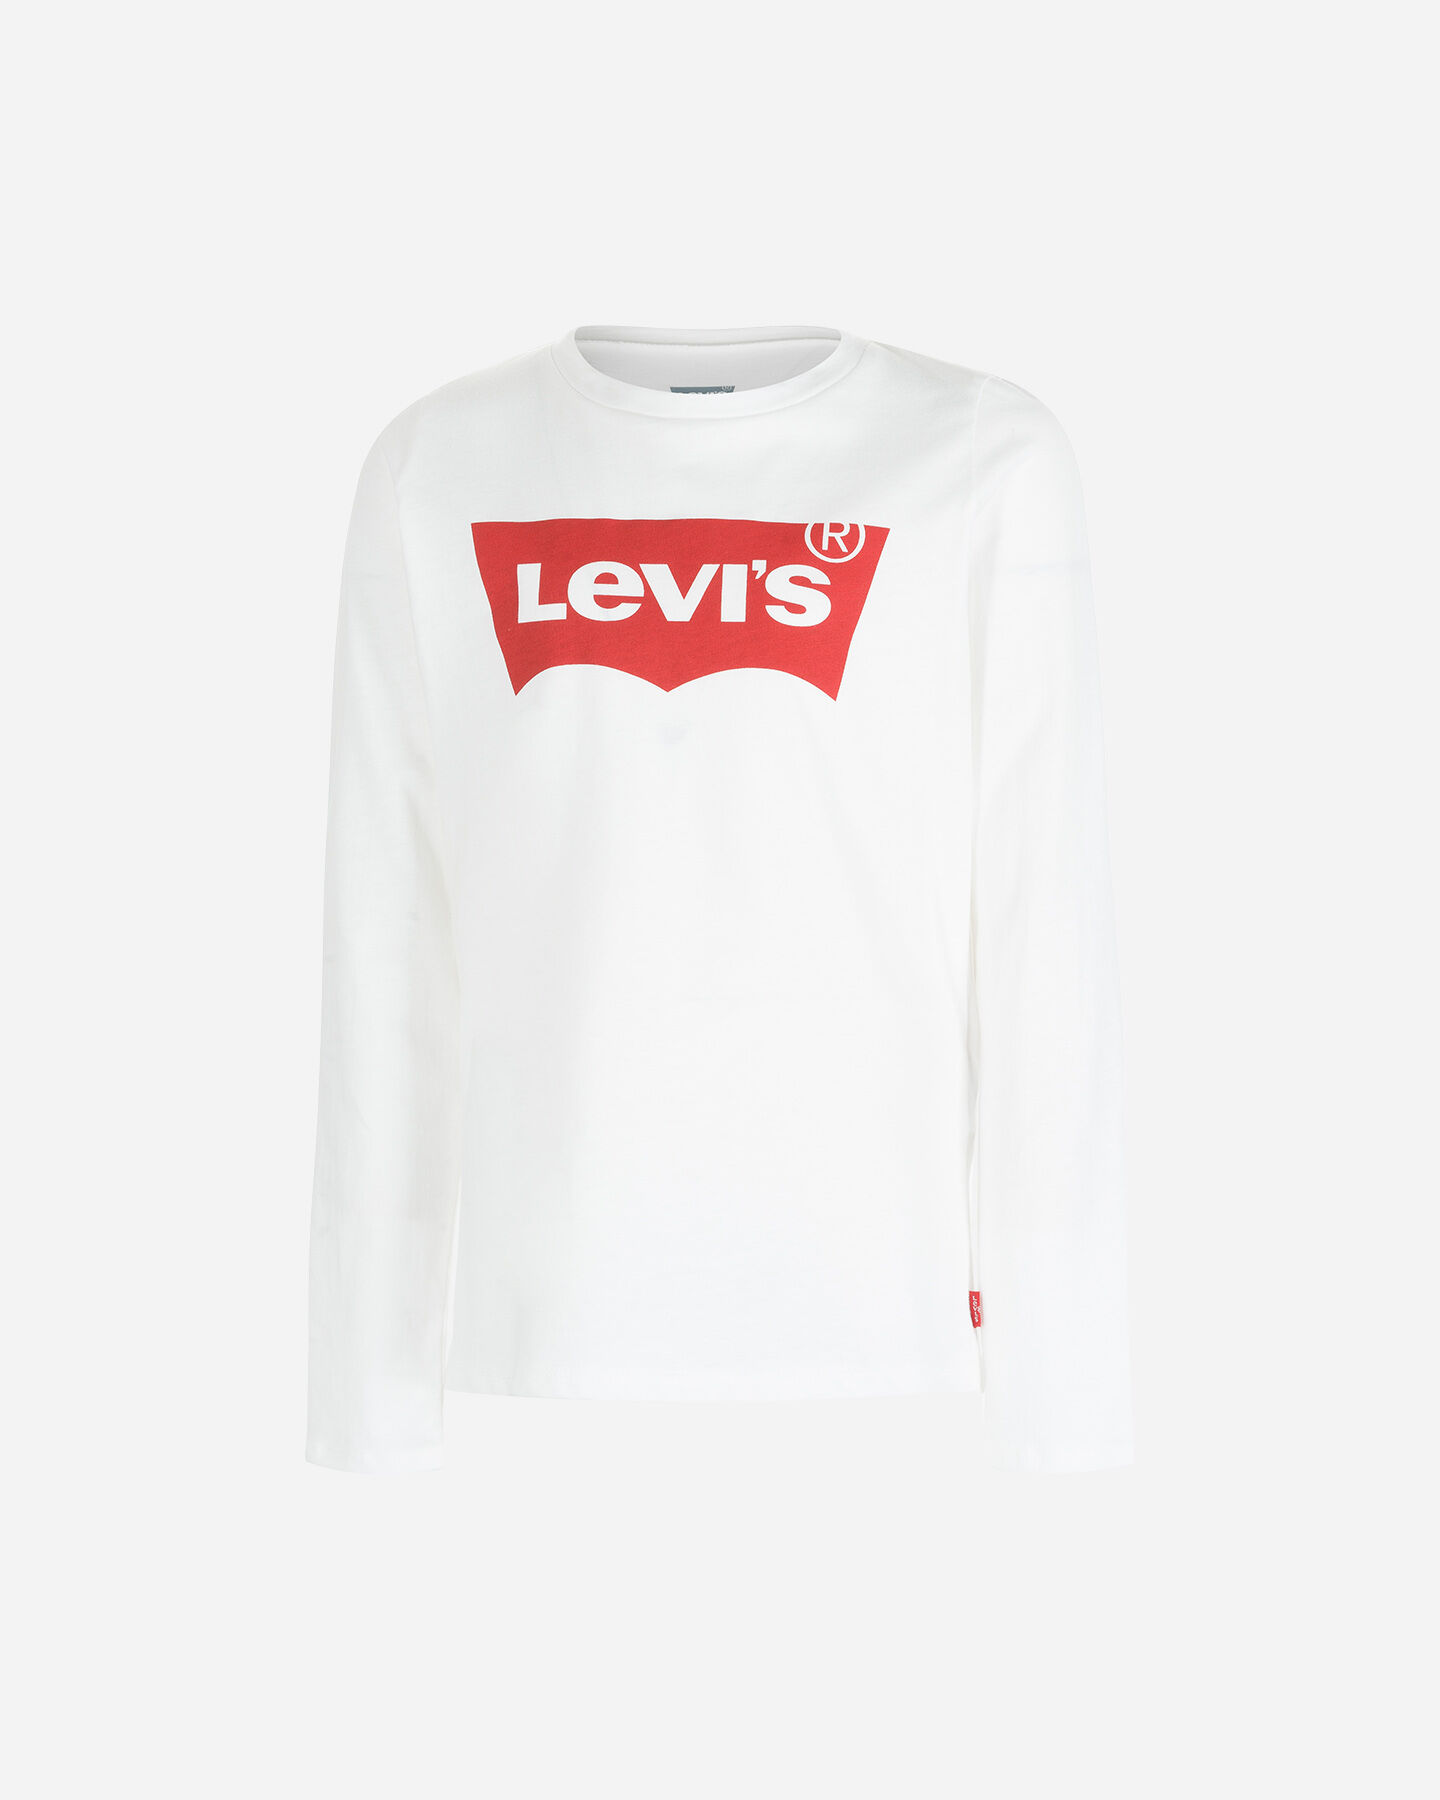  T-Shirt LEVI'S CLASSIC JR S4083767|001|6A scatto 0